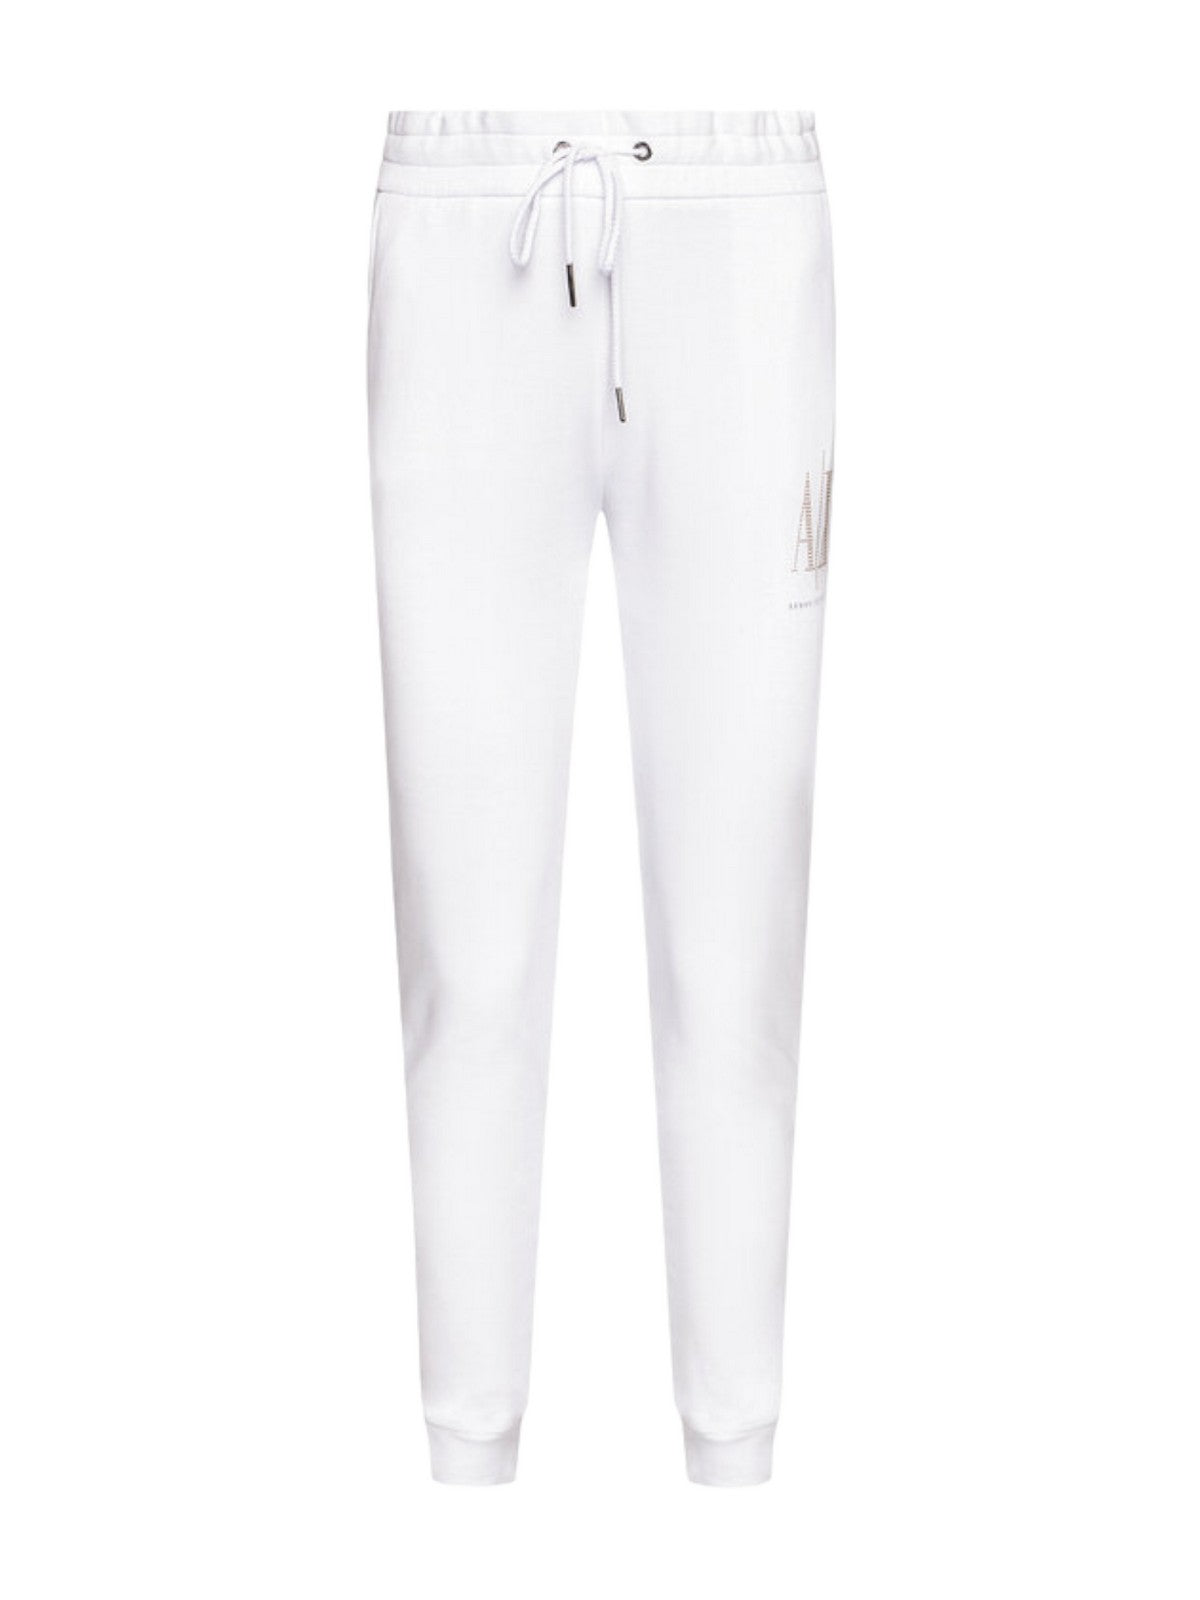 ARMANI EXCHANGE Pantalone Donna  8NYPDX YJ68Z 1000 Bianco